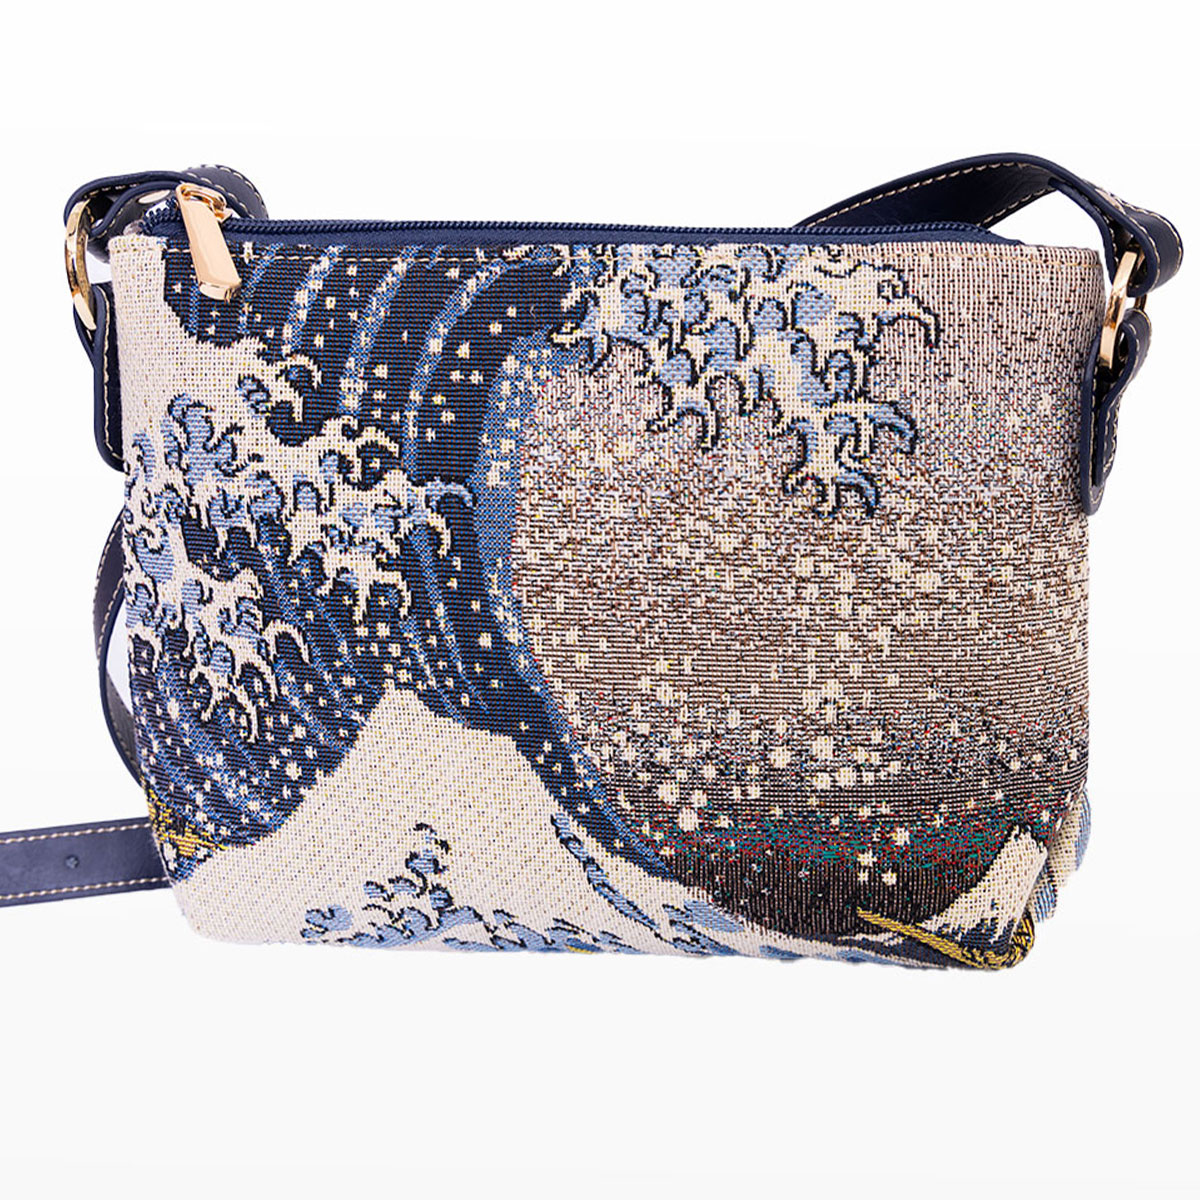 Hokusai shoulder bag - The Great Wave of Kanagawa